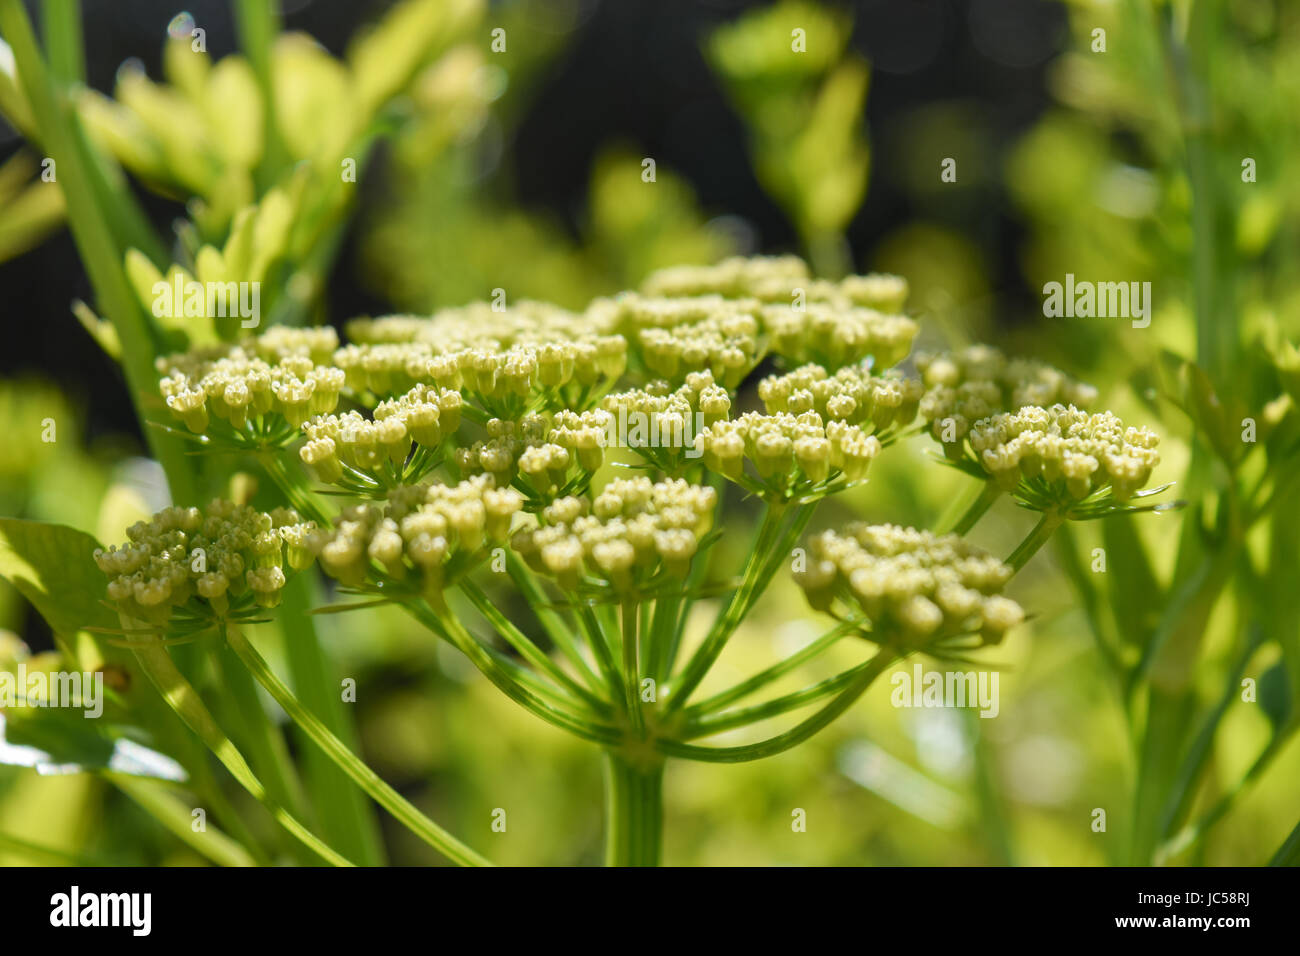 Flowering parsley plant Stock Photo